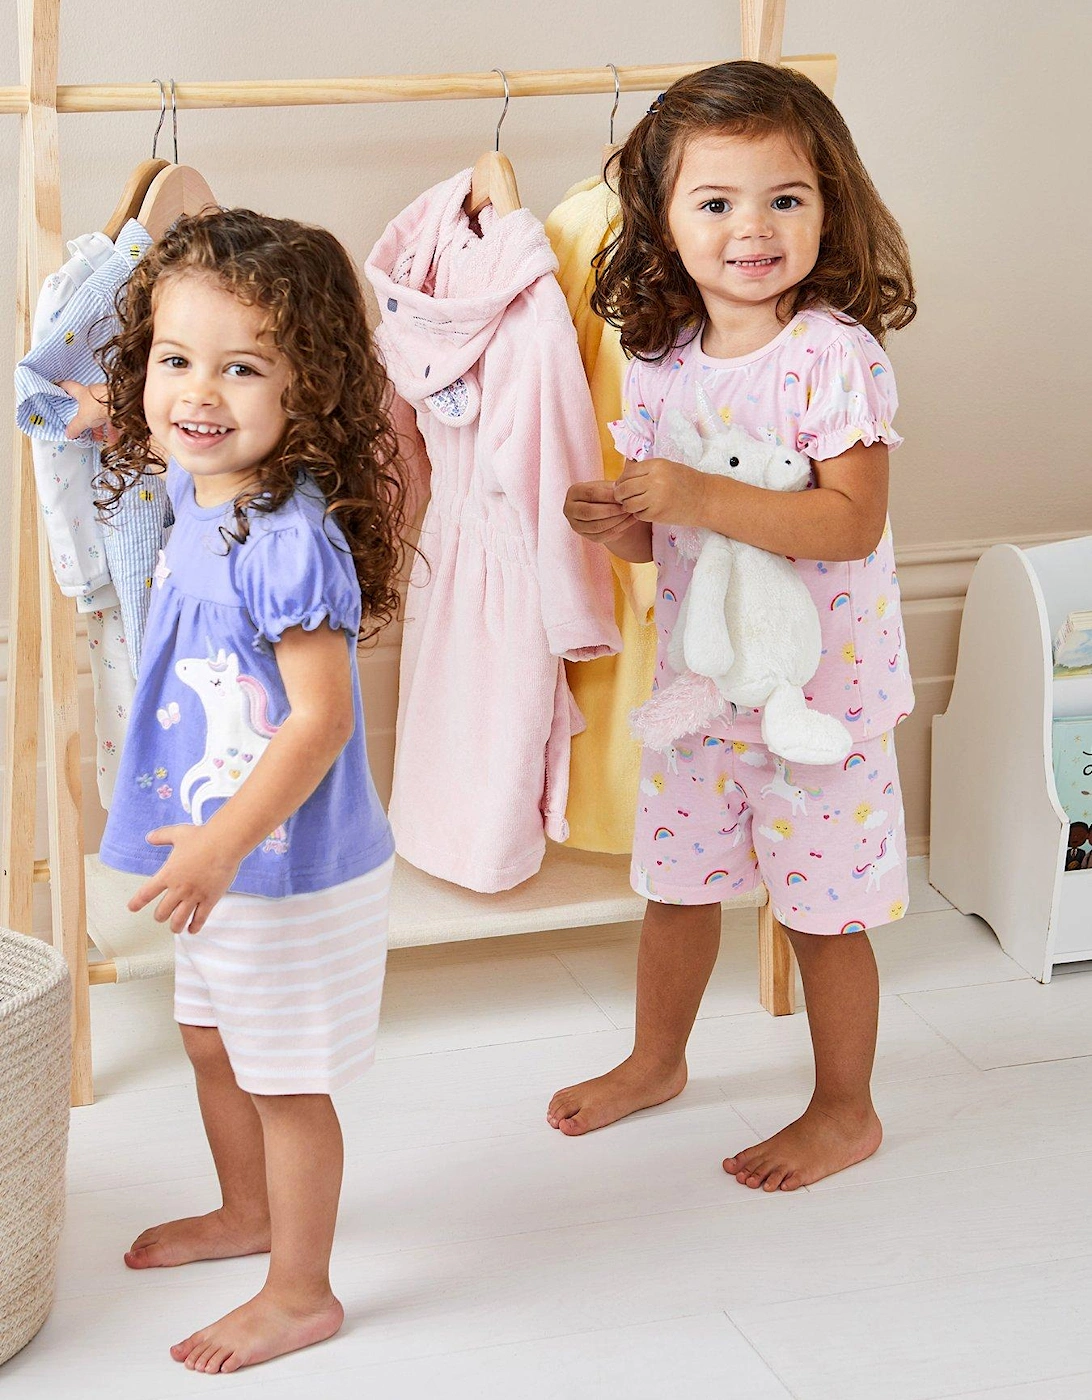 Girls 2-Pack Unicorn Jersey Pyjamas - Pink